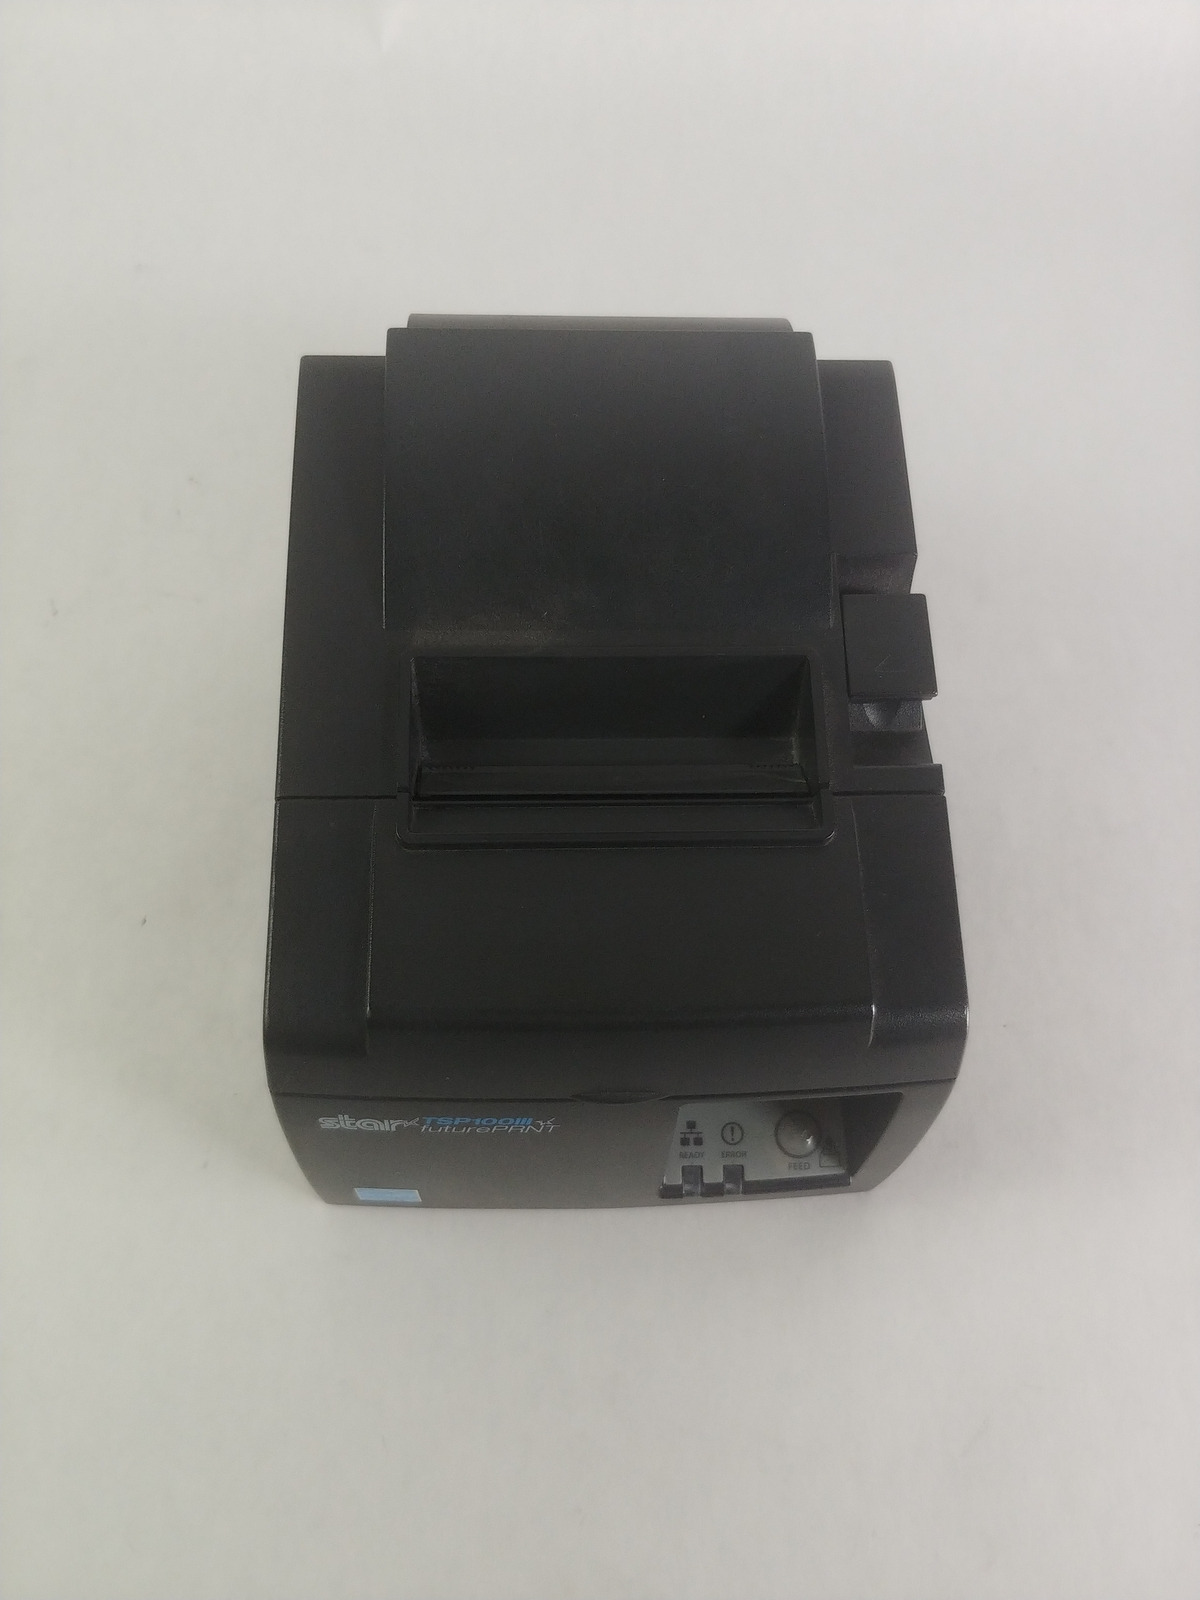 Star Micronics USB Monochrome Point of Sale Printer